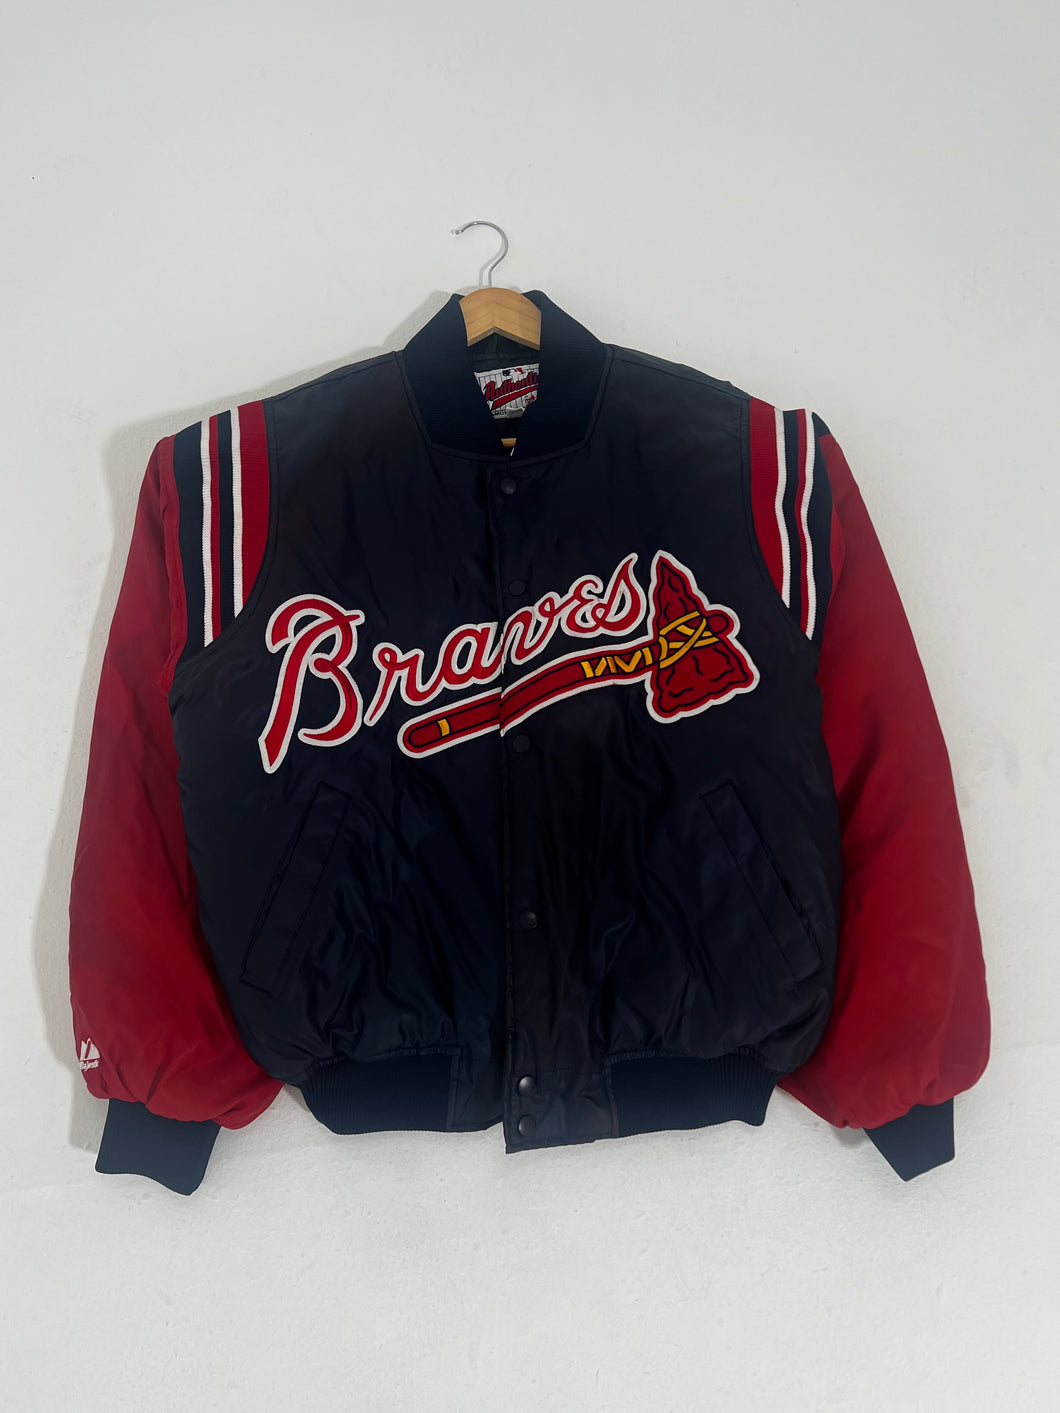 Vintage 2000's Authentic MLB Atlanta Braves Bomber Jacket Sz. M